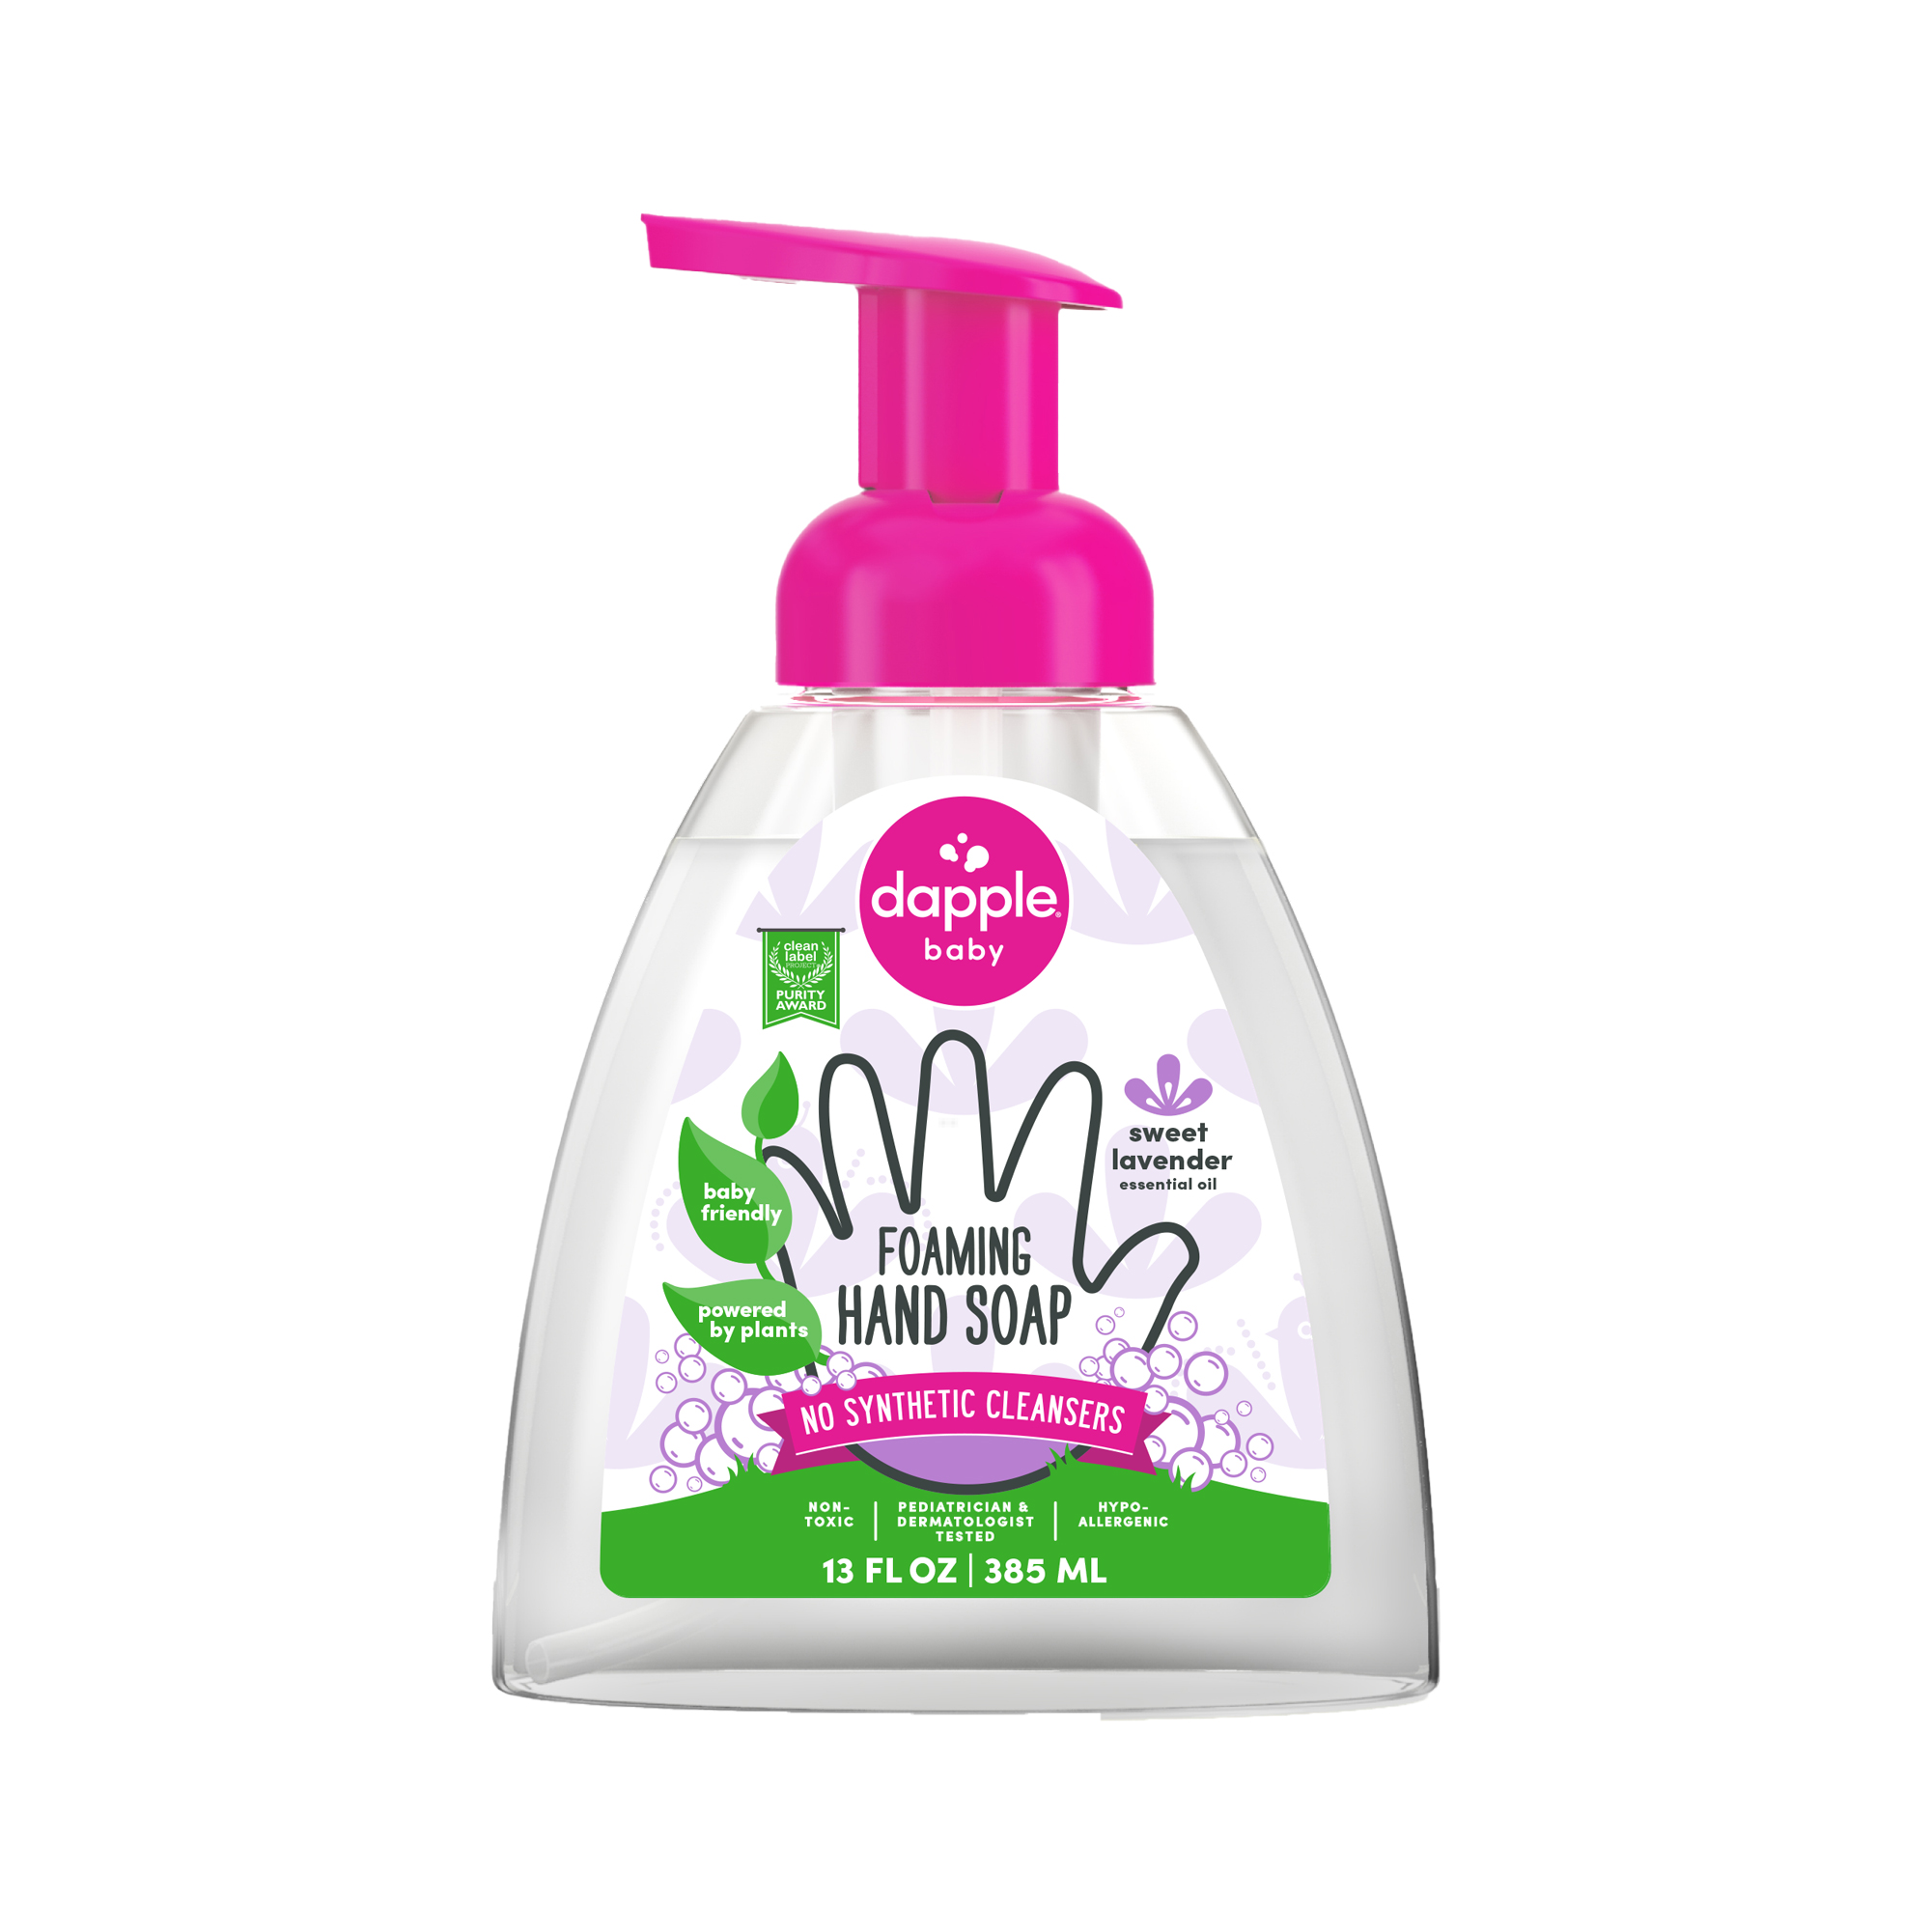 Foaming Hand Soap - sweet lavender